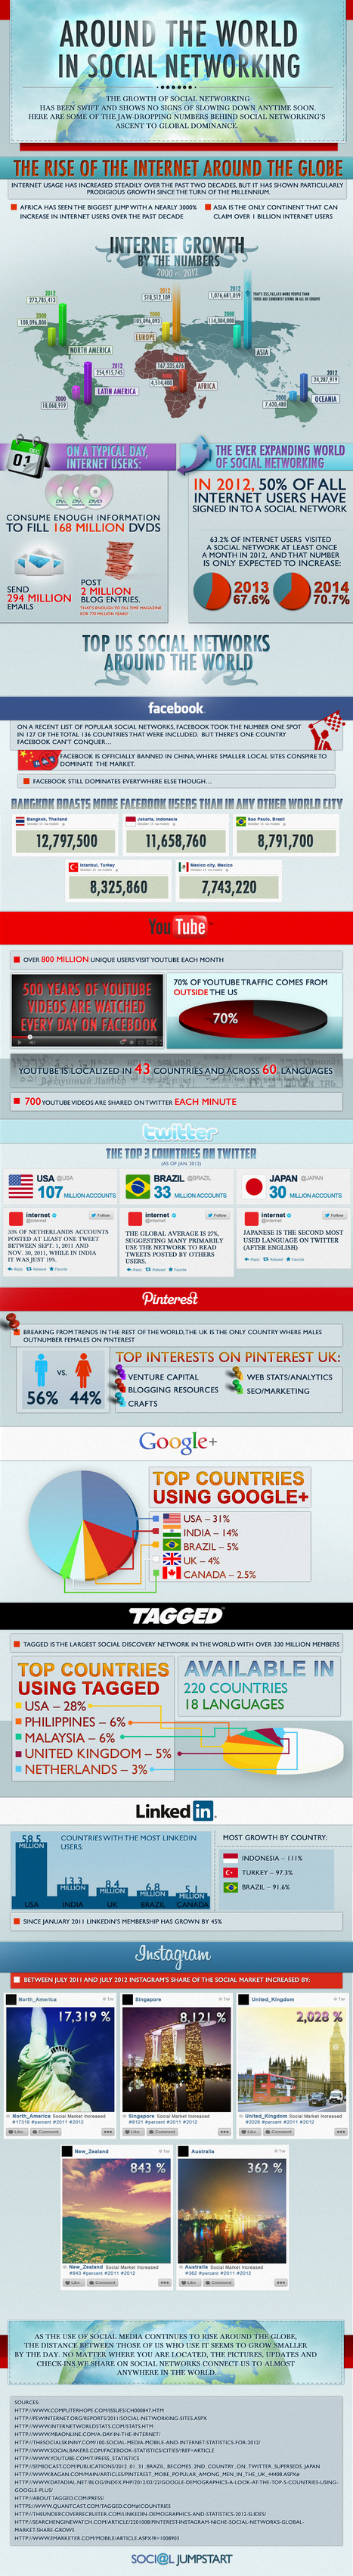 Facebook, Twitter, Pinterest, Instagram – How Big Is Social Media Around The World? | Web 2.0 for juandoming | Scoop.it